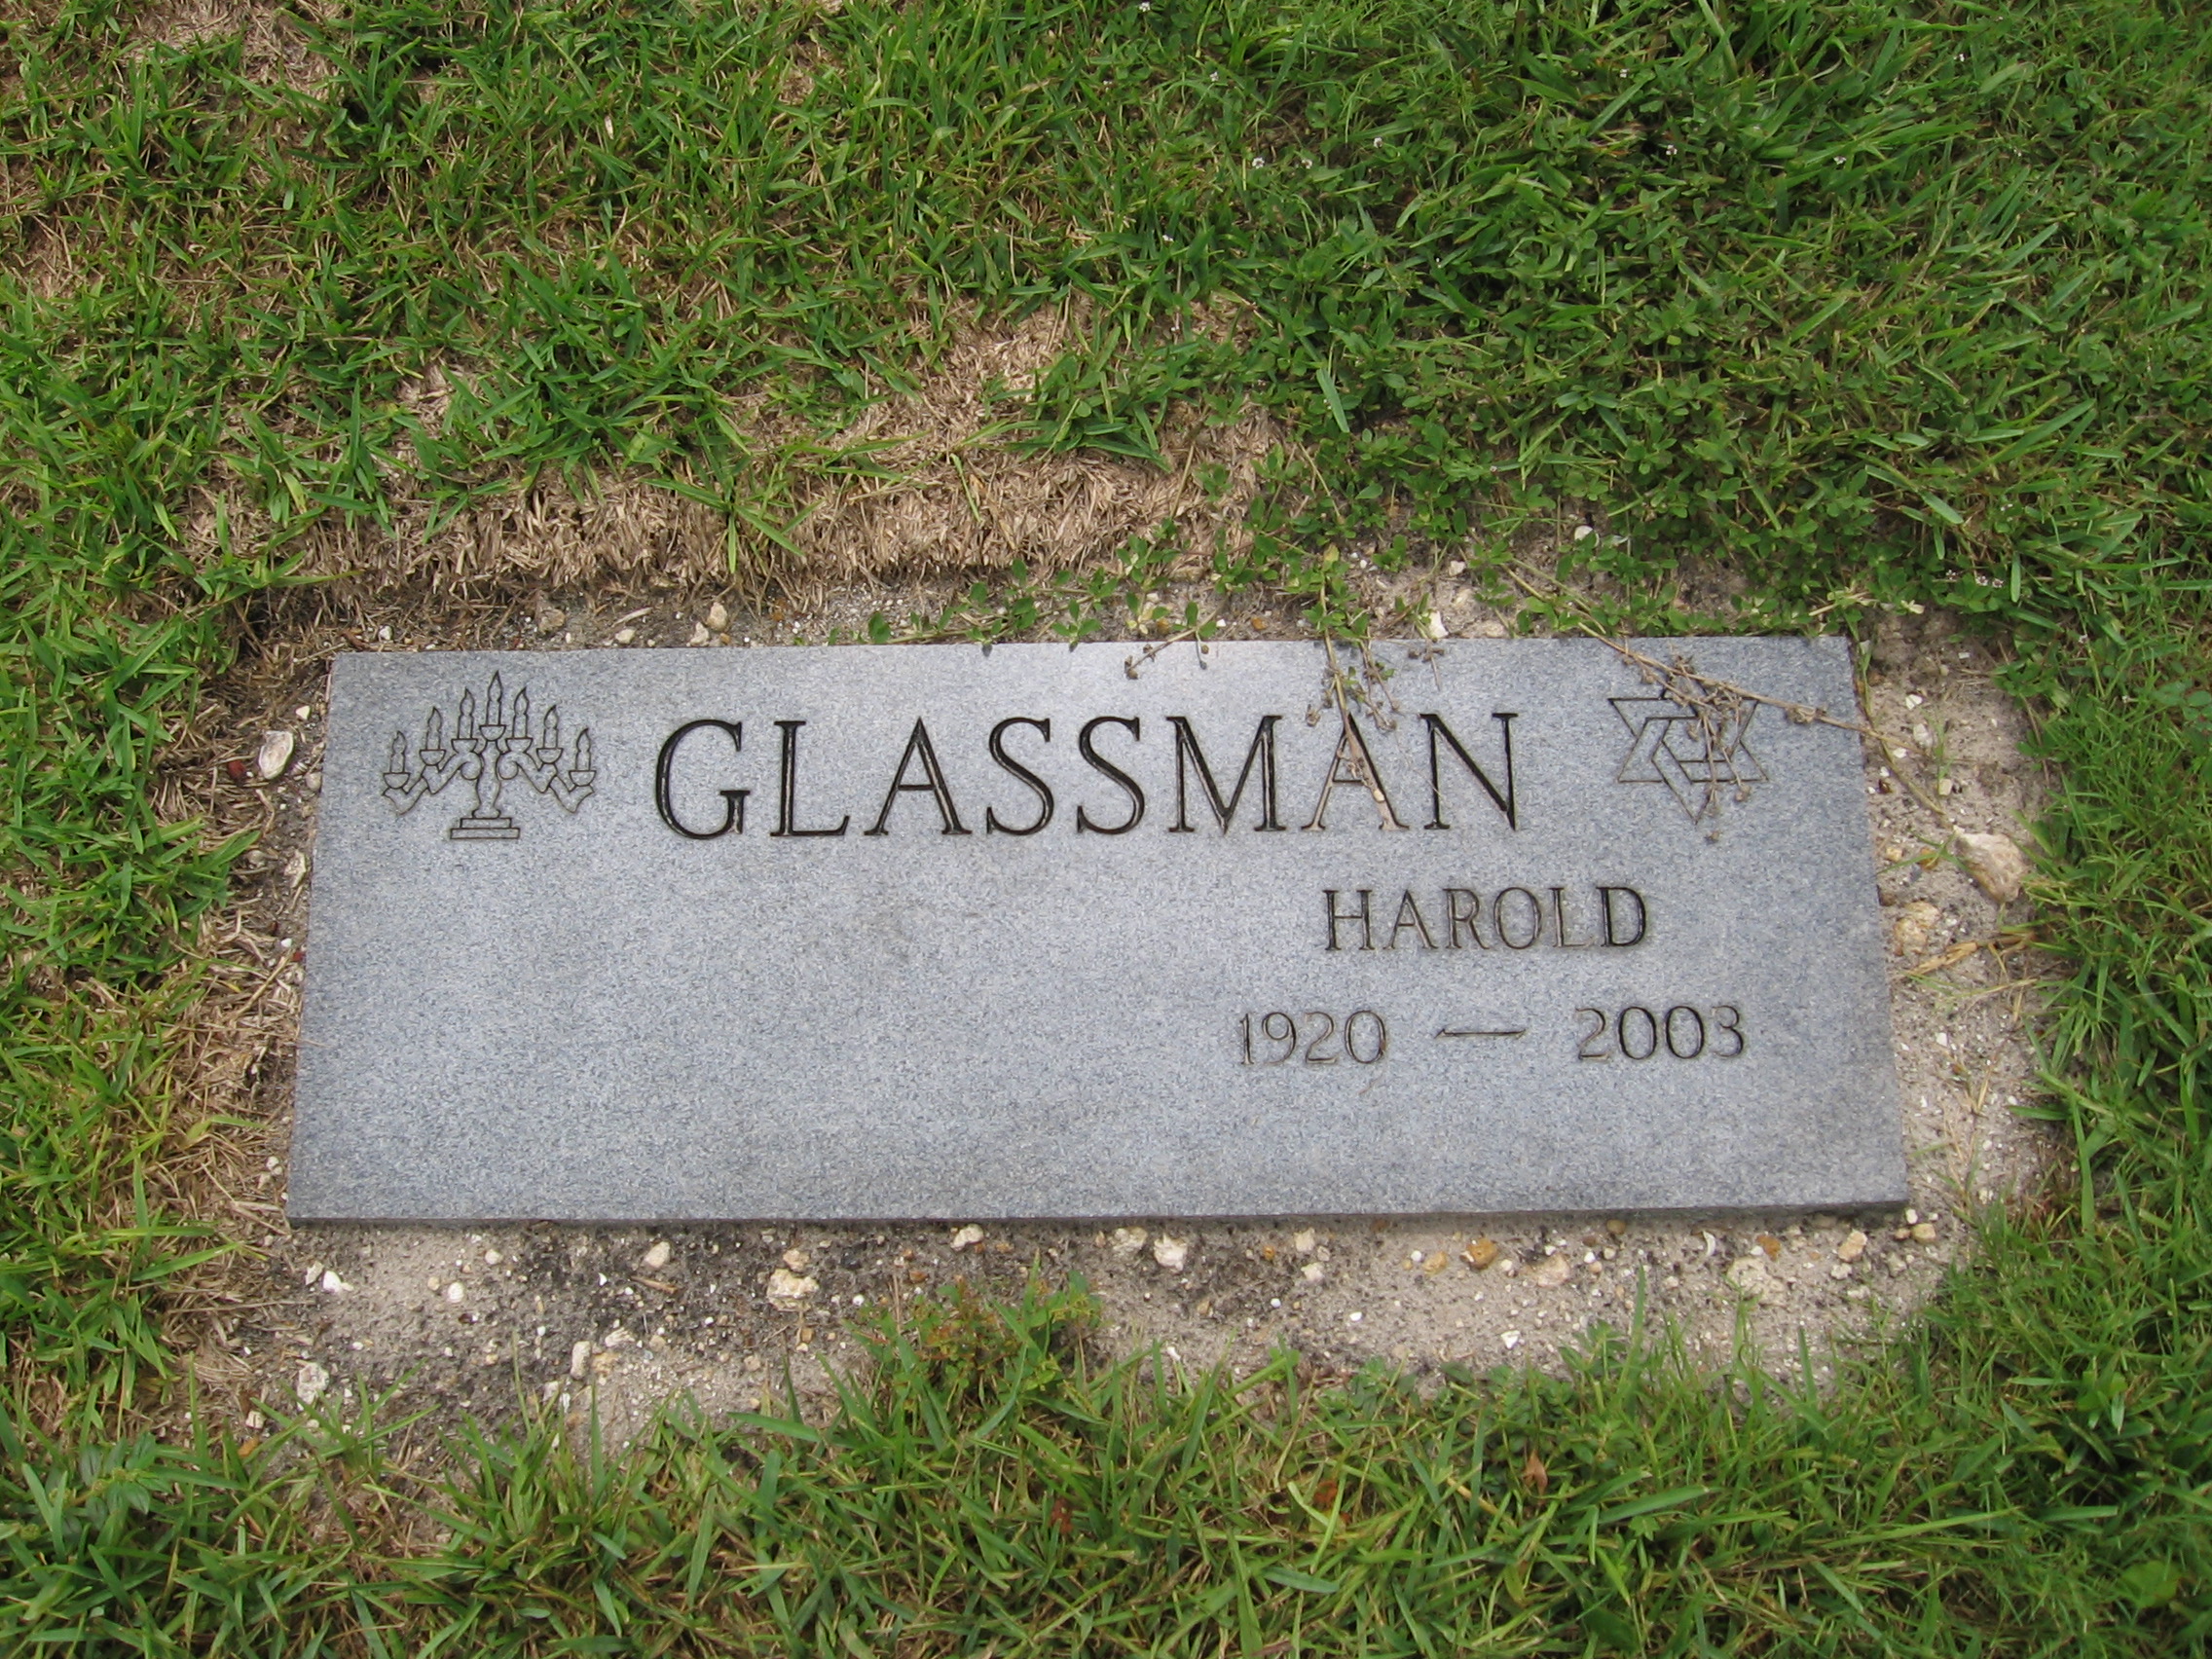 Harold Glassman